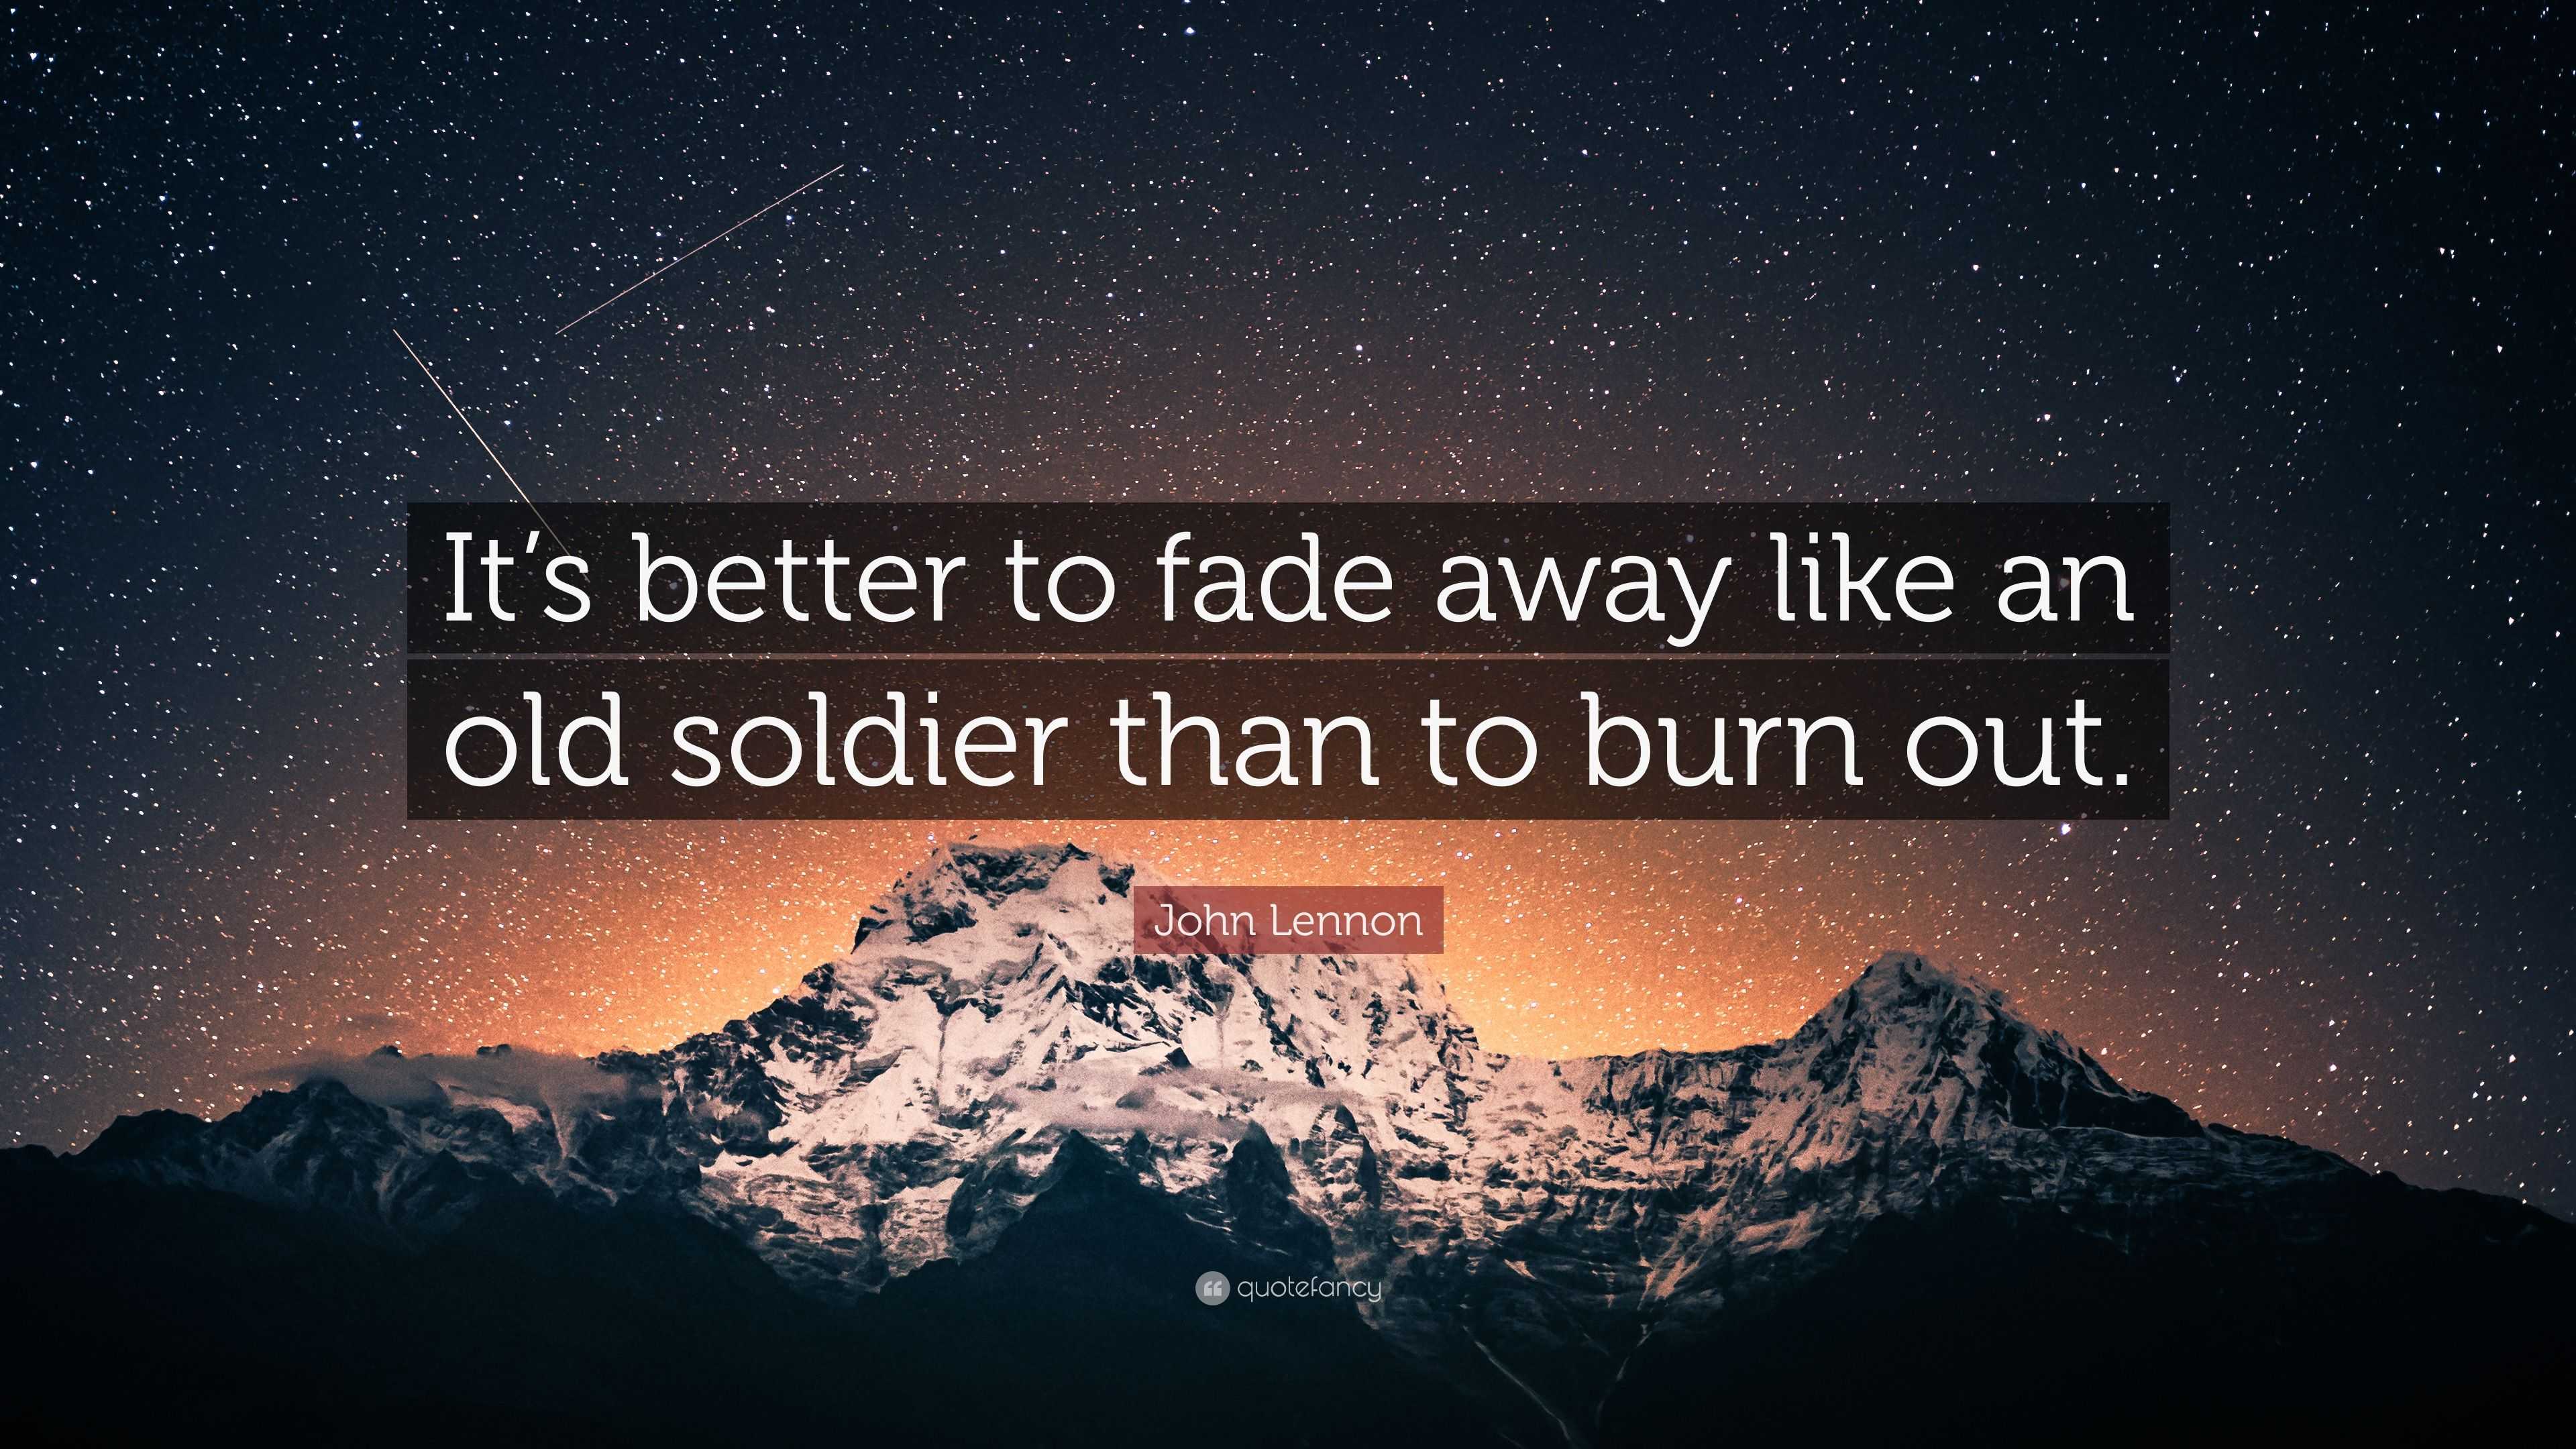 esham lyrics its better to burn out than fade away